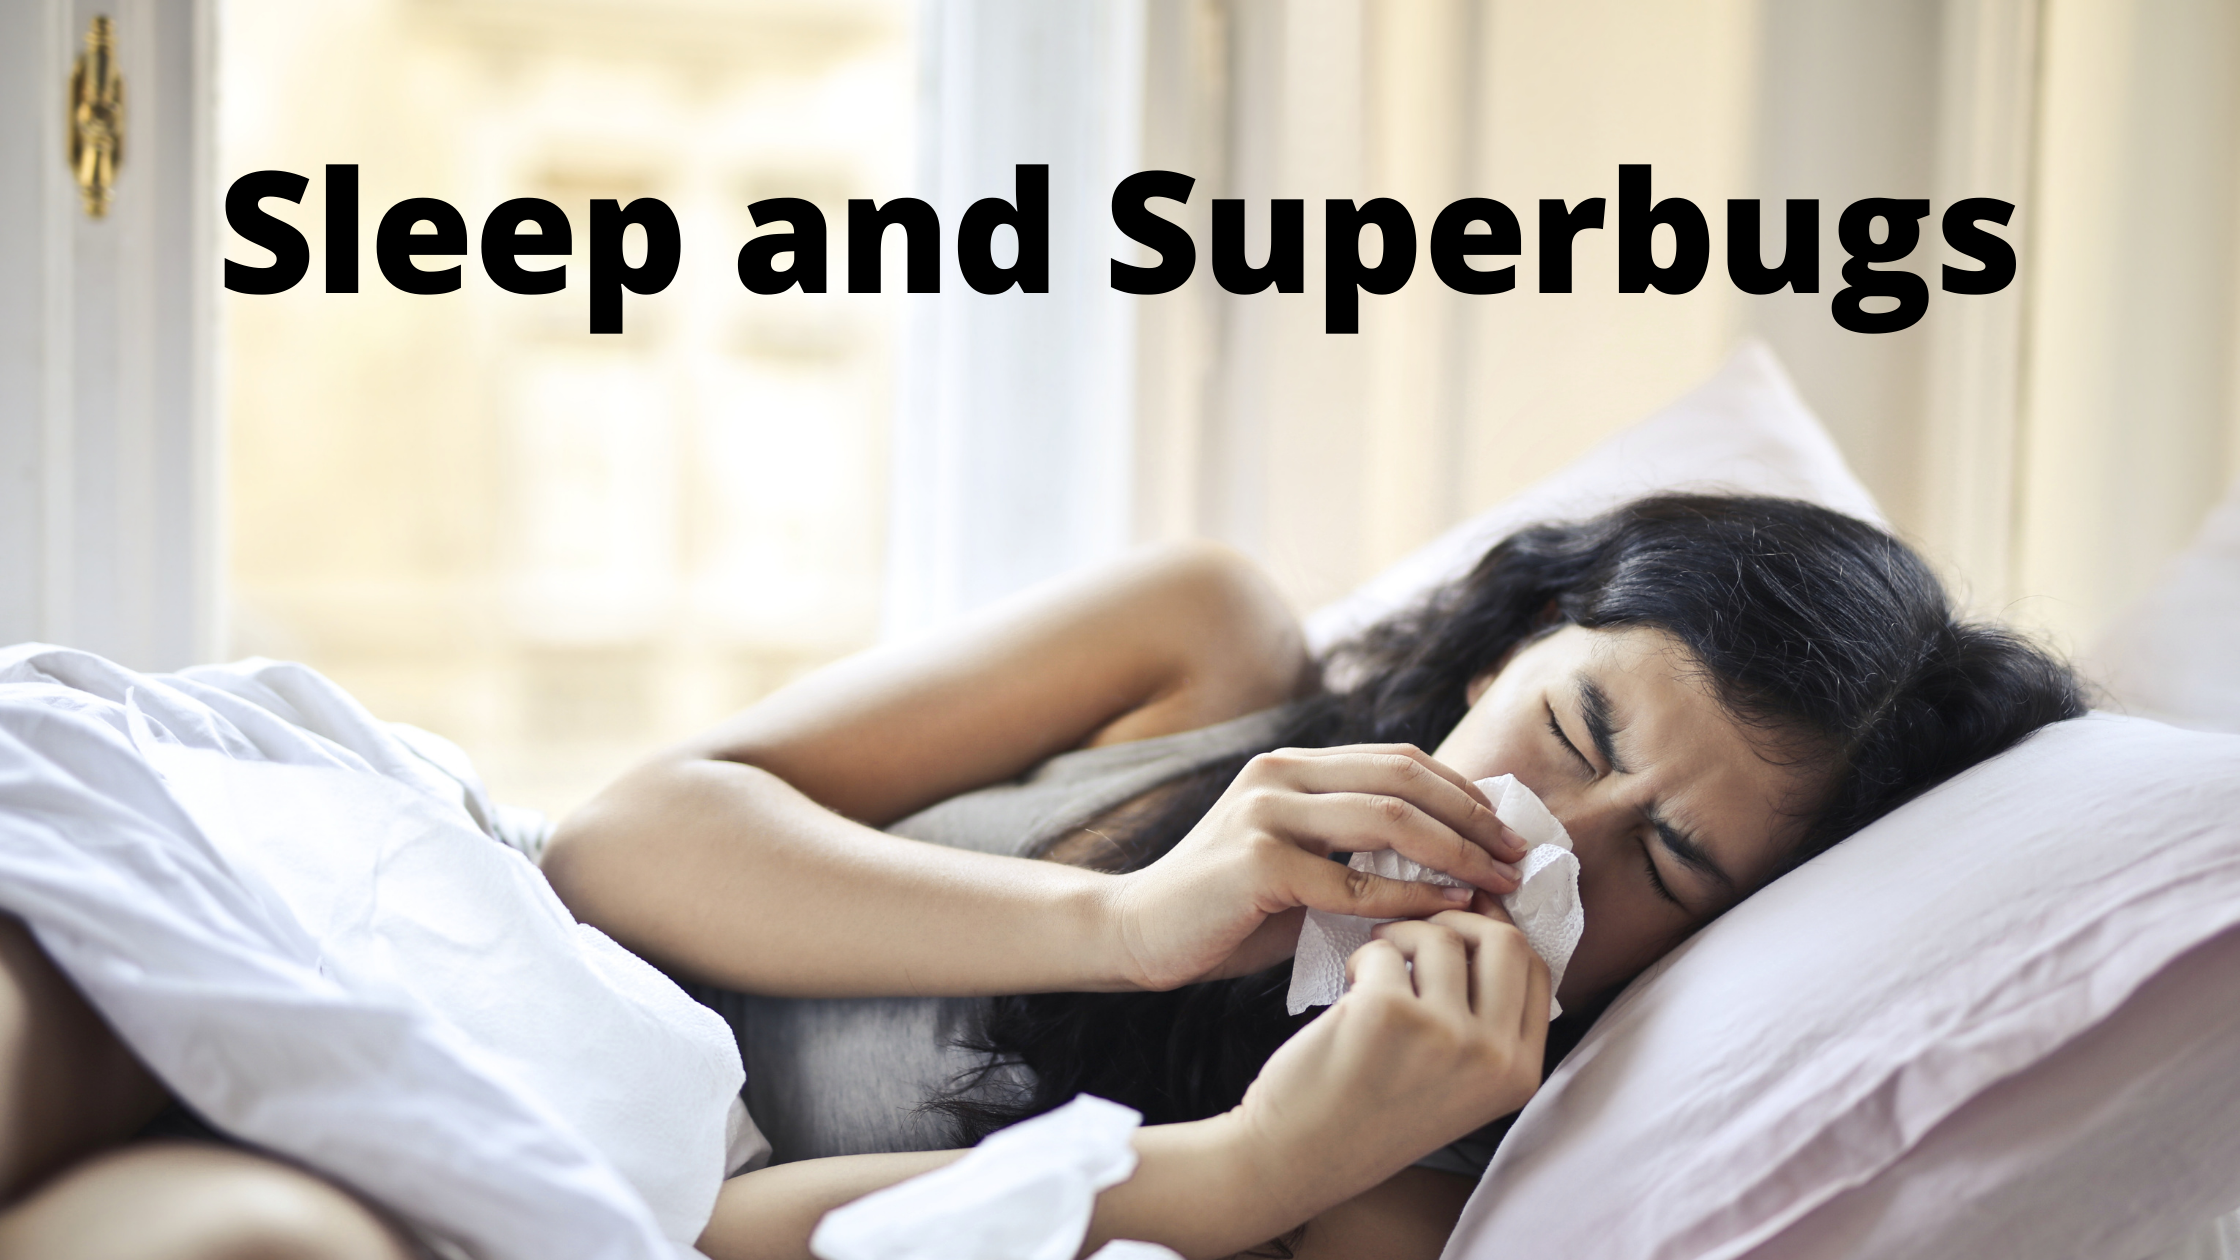 Sleep and Superbugs